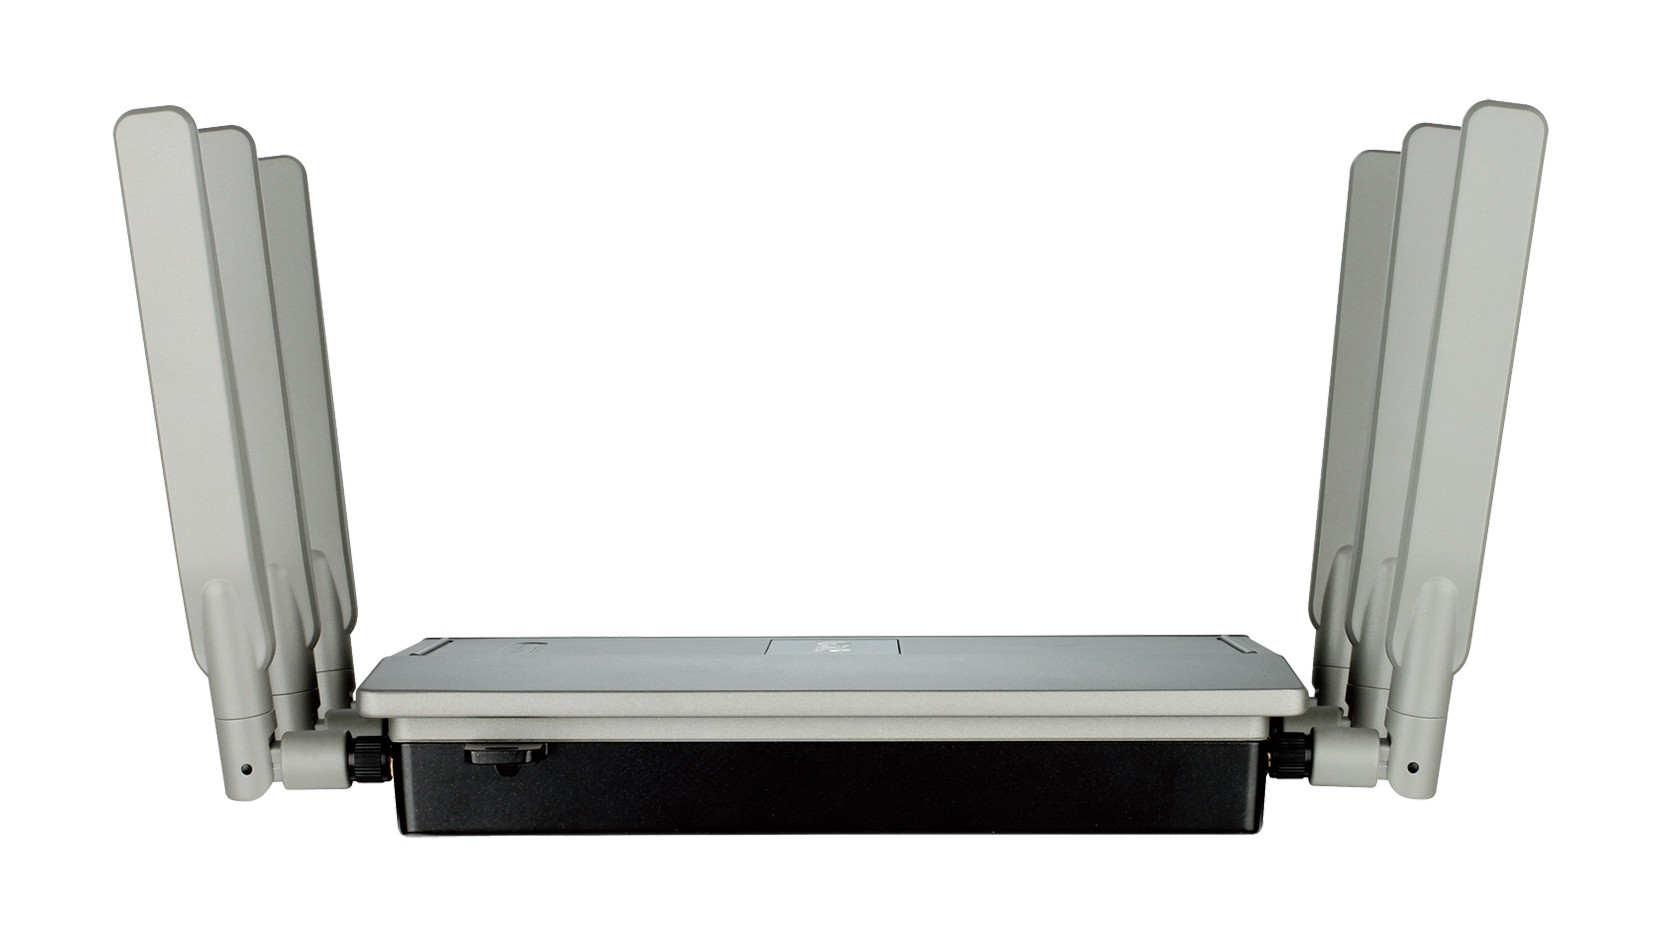 DAP-2695 Wireless AC1750 Simultaneous Dual-Band PoE Access Point 